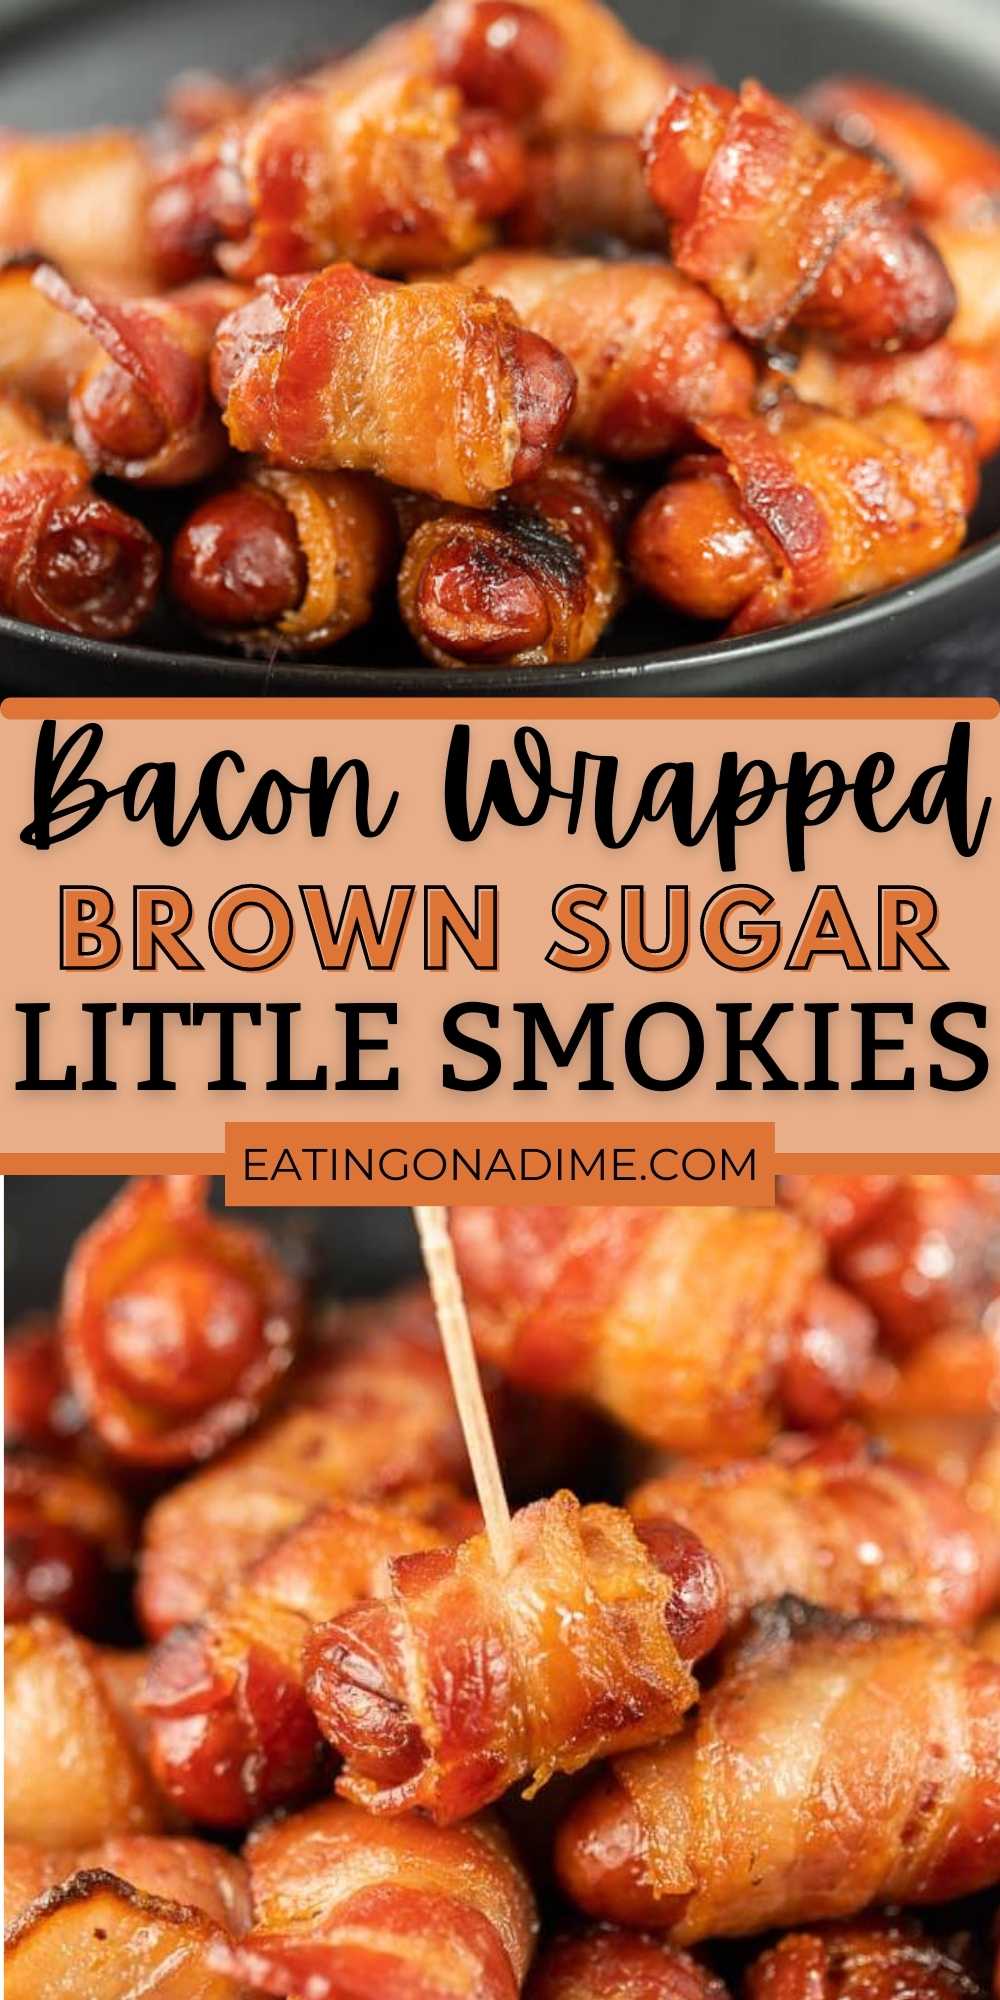 Bacon wrapped little smokies recipe - Easy appetizer recipe